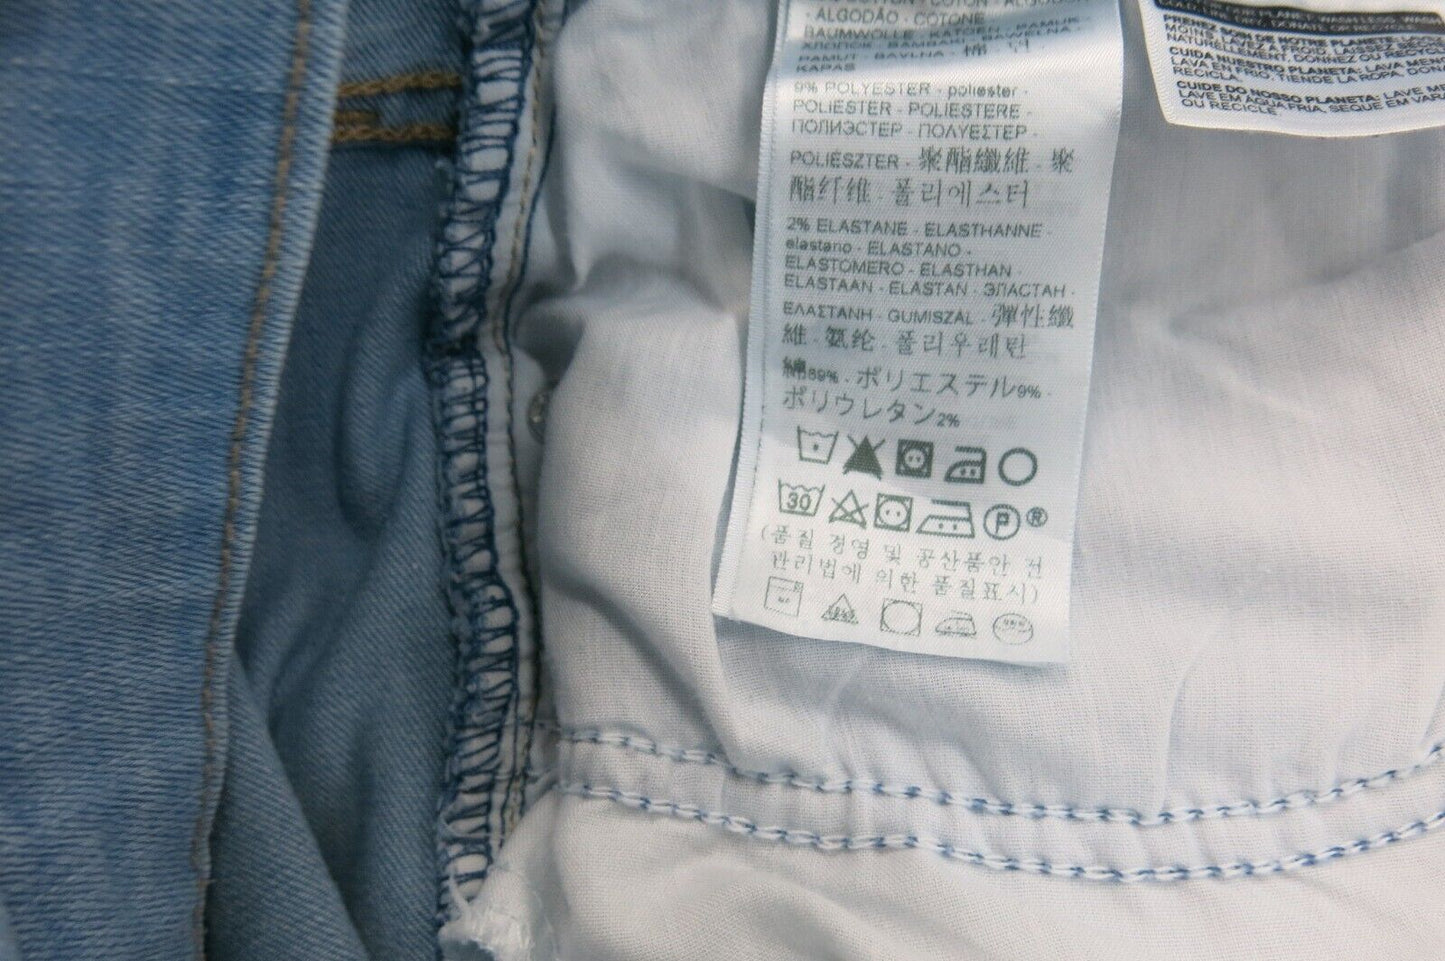 Levis Womens Cropped Jeans Denim Stretch Pockets Light Blue Size 22W